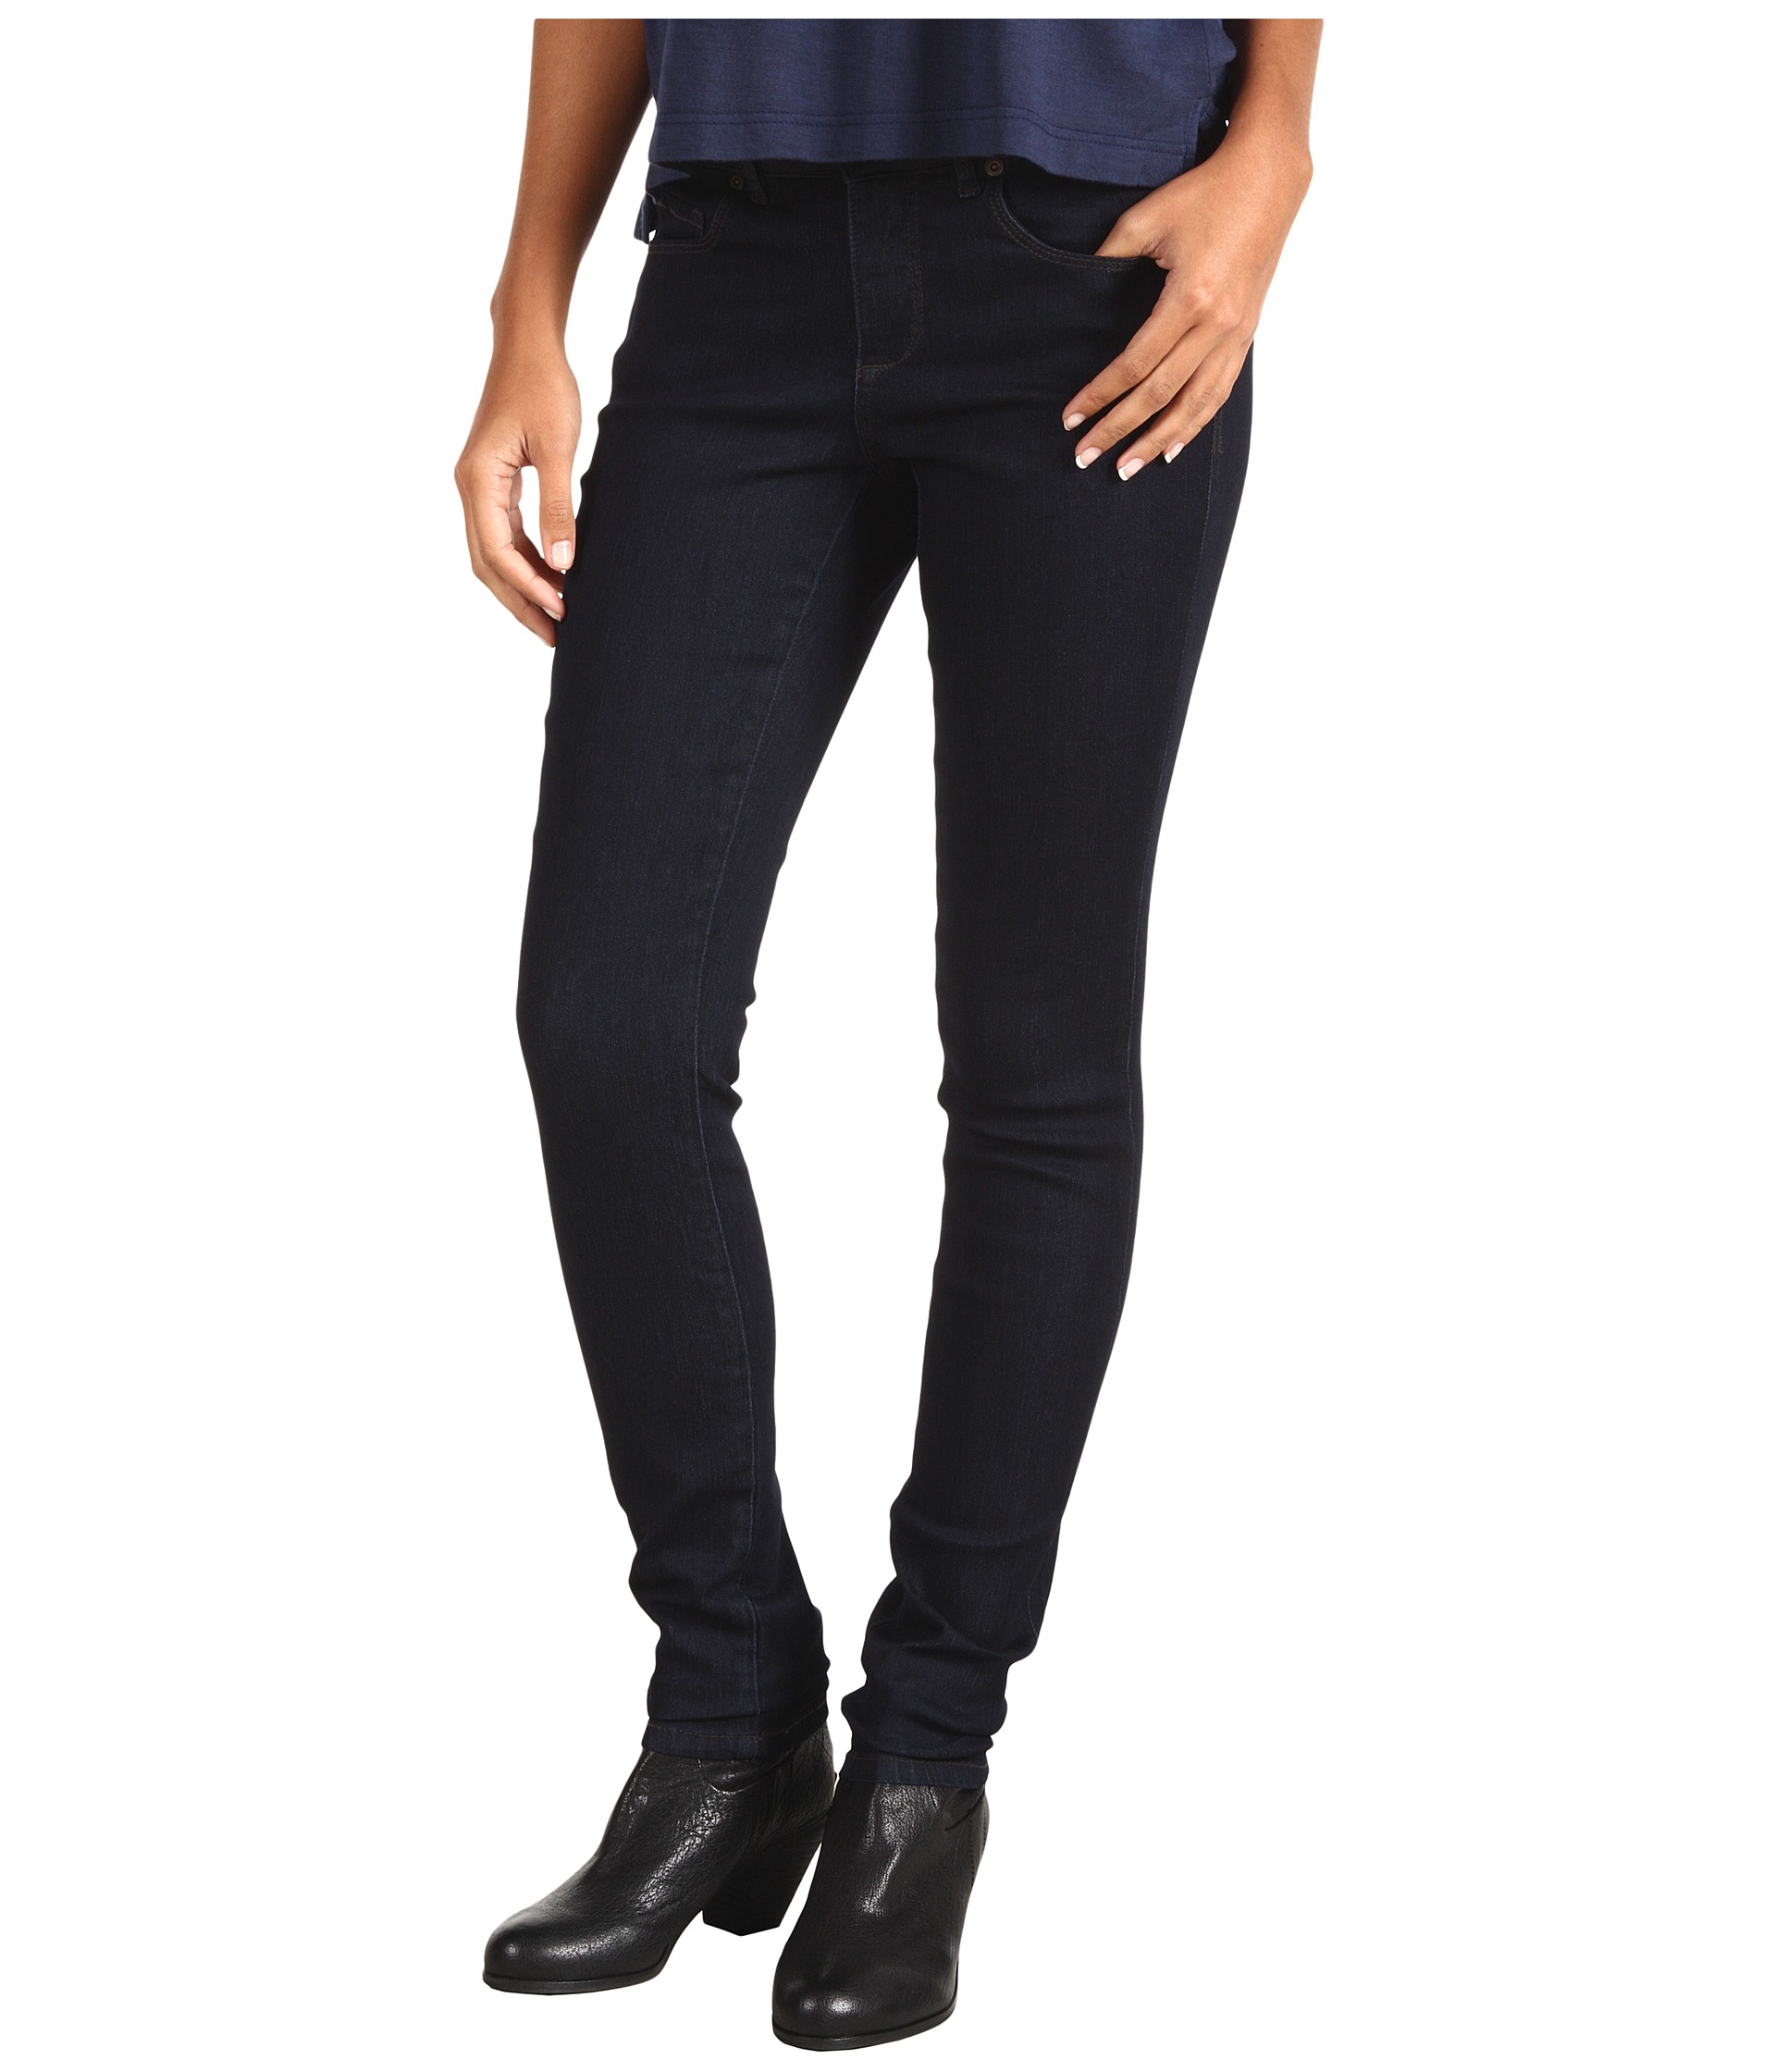 Calvin Klein Jeans Powerstretch Curvy Skinny Denim in Rinse at Zappos.com